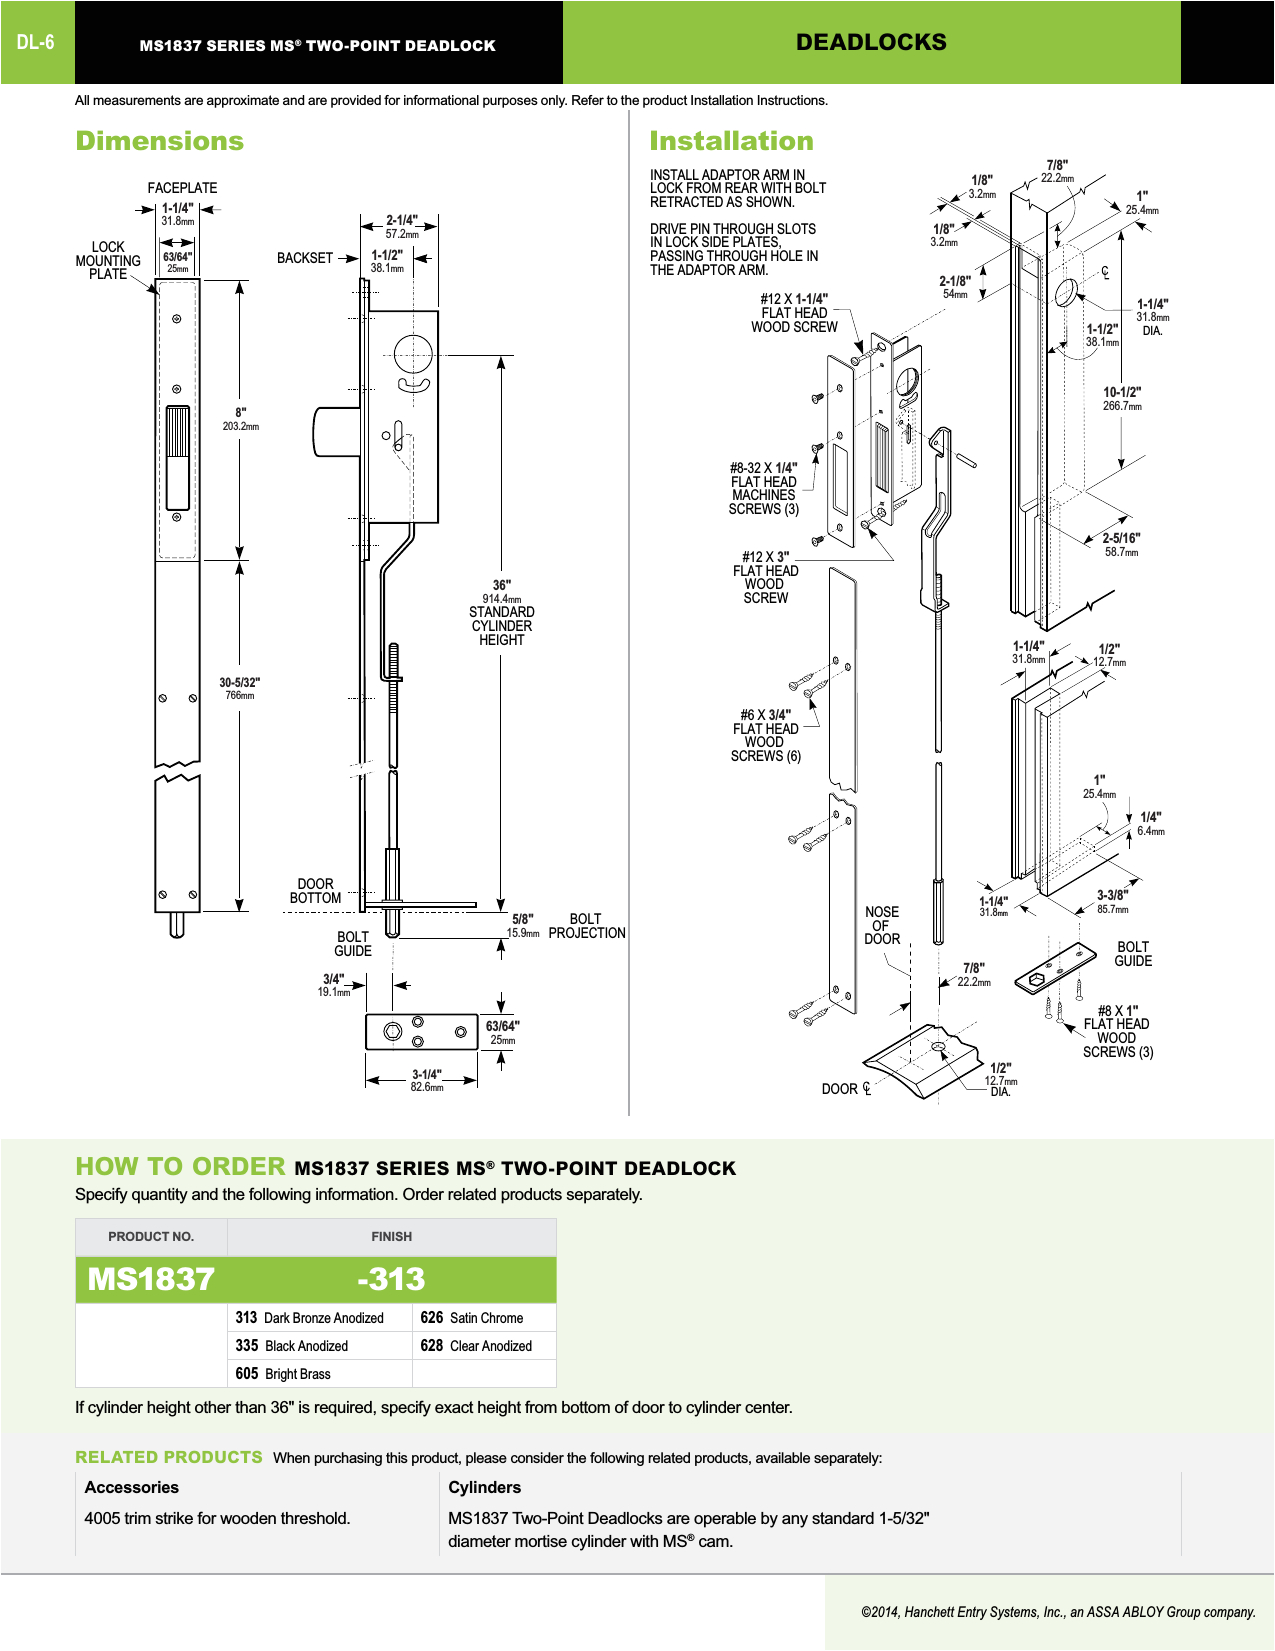 Adams Rite 8600 Wiring Diagram Adams Rite 2015 Full Line Catalog Rite2015catalog Compressed